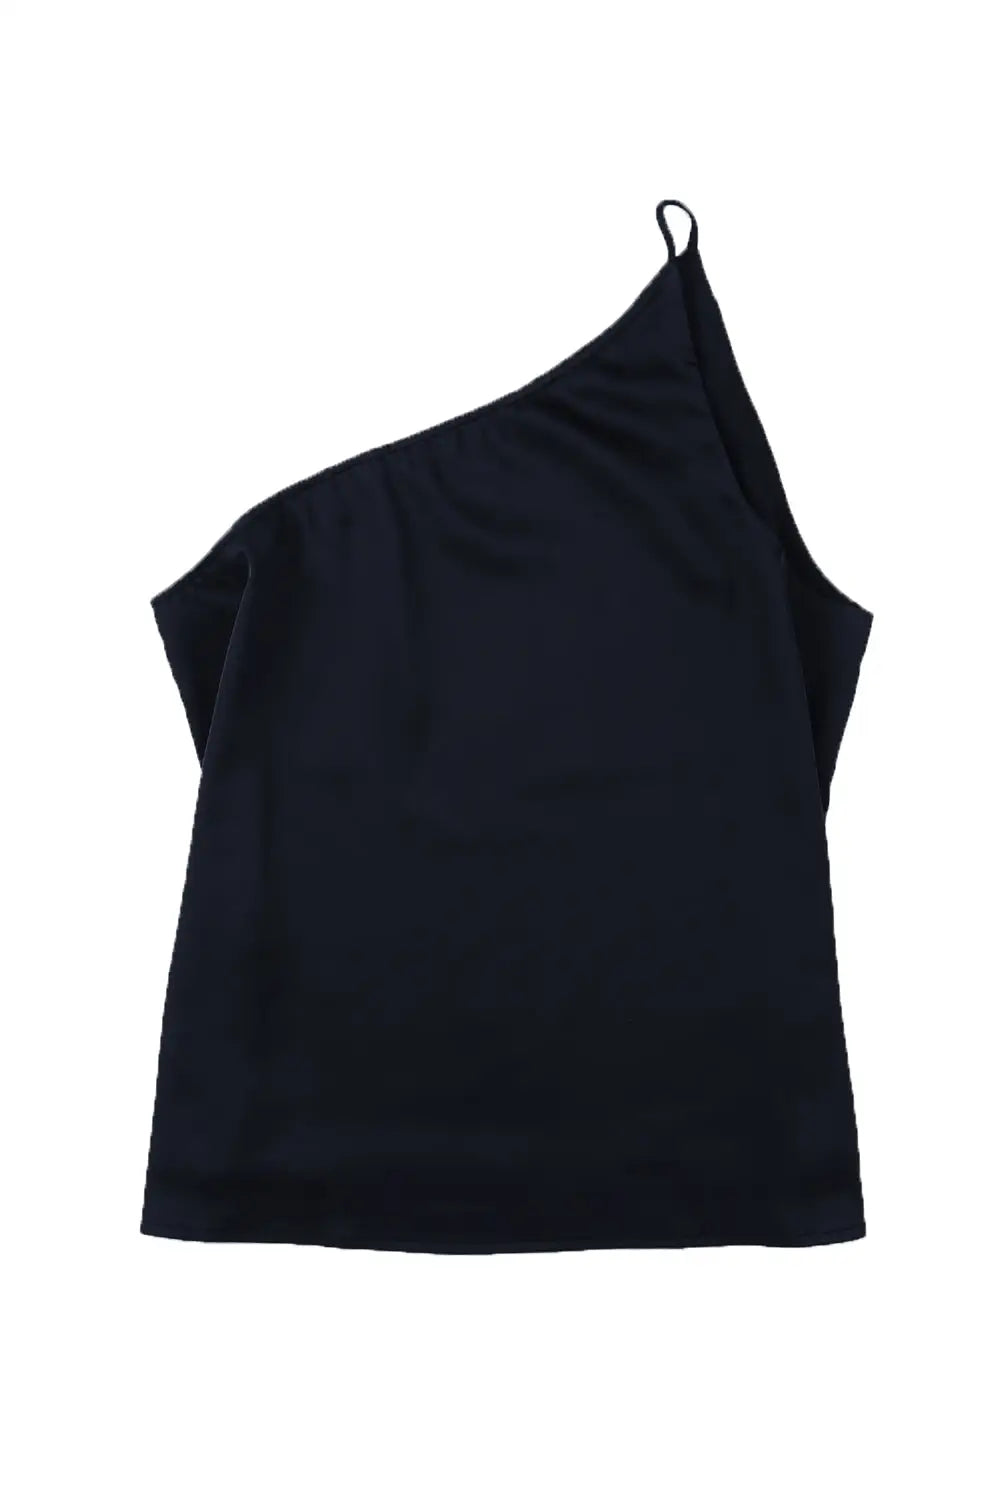 Black satin one shoulder loose tank top - tops